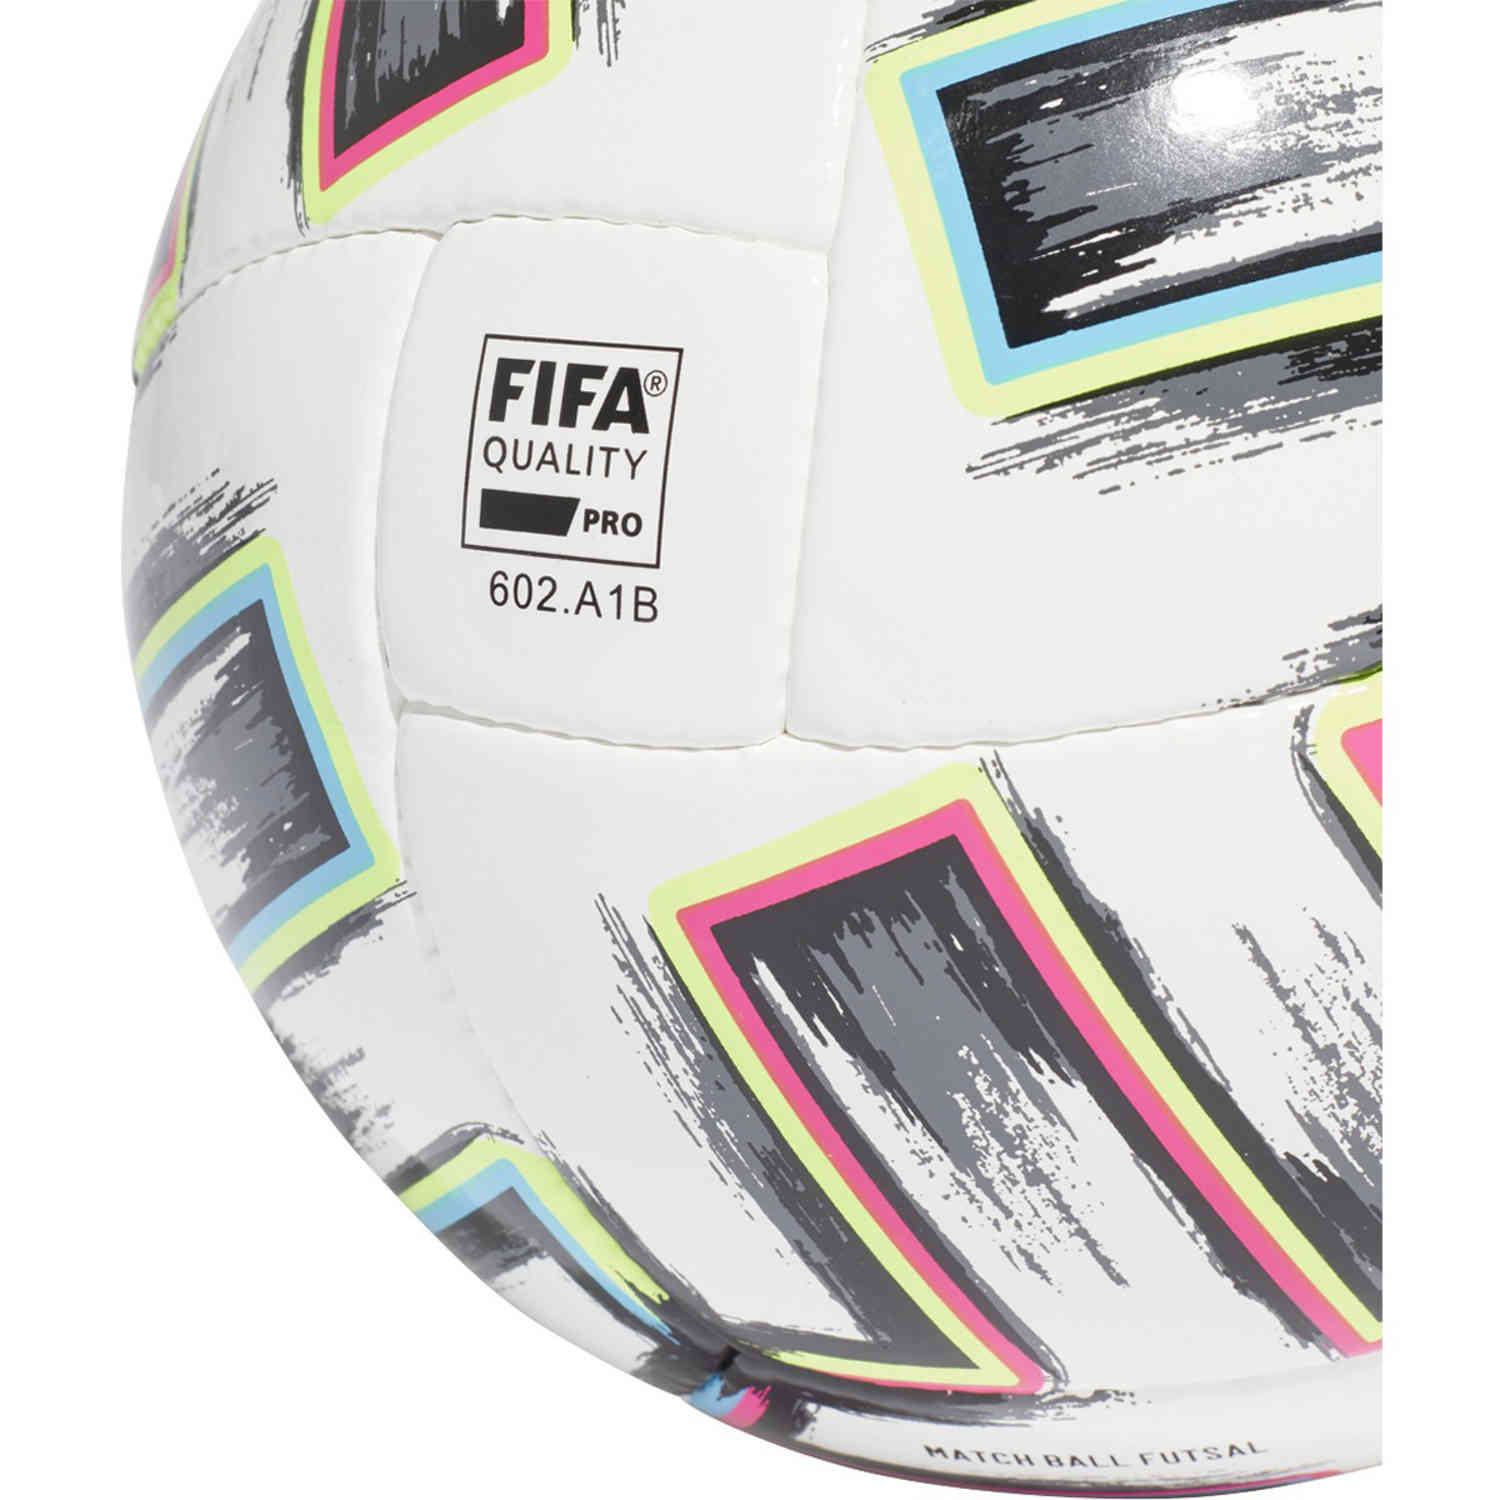 adidas Uniforia Futsal Ball - Euro 2020 